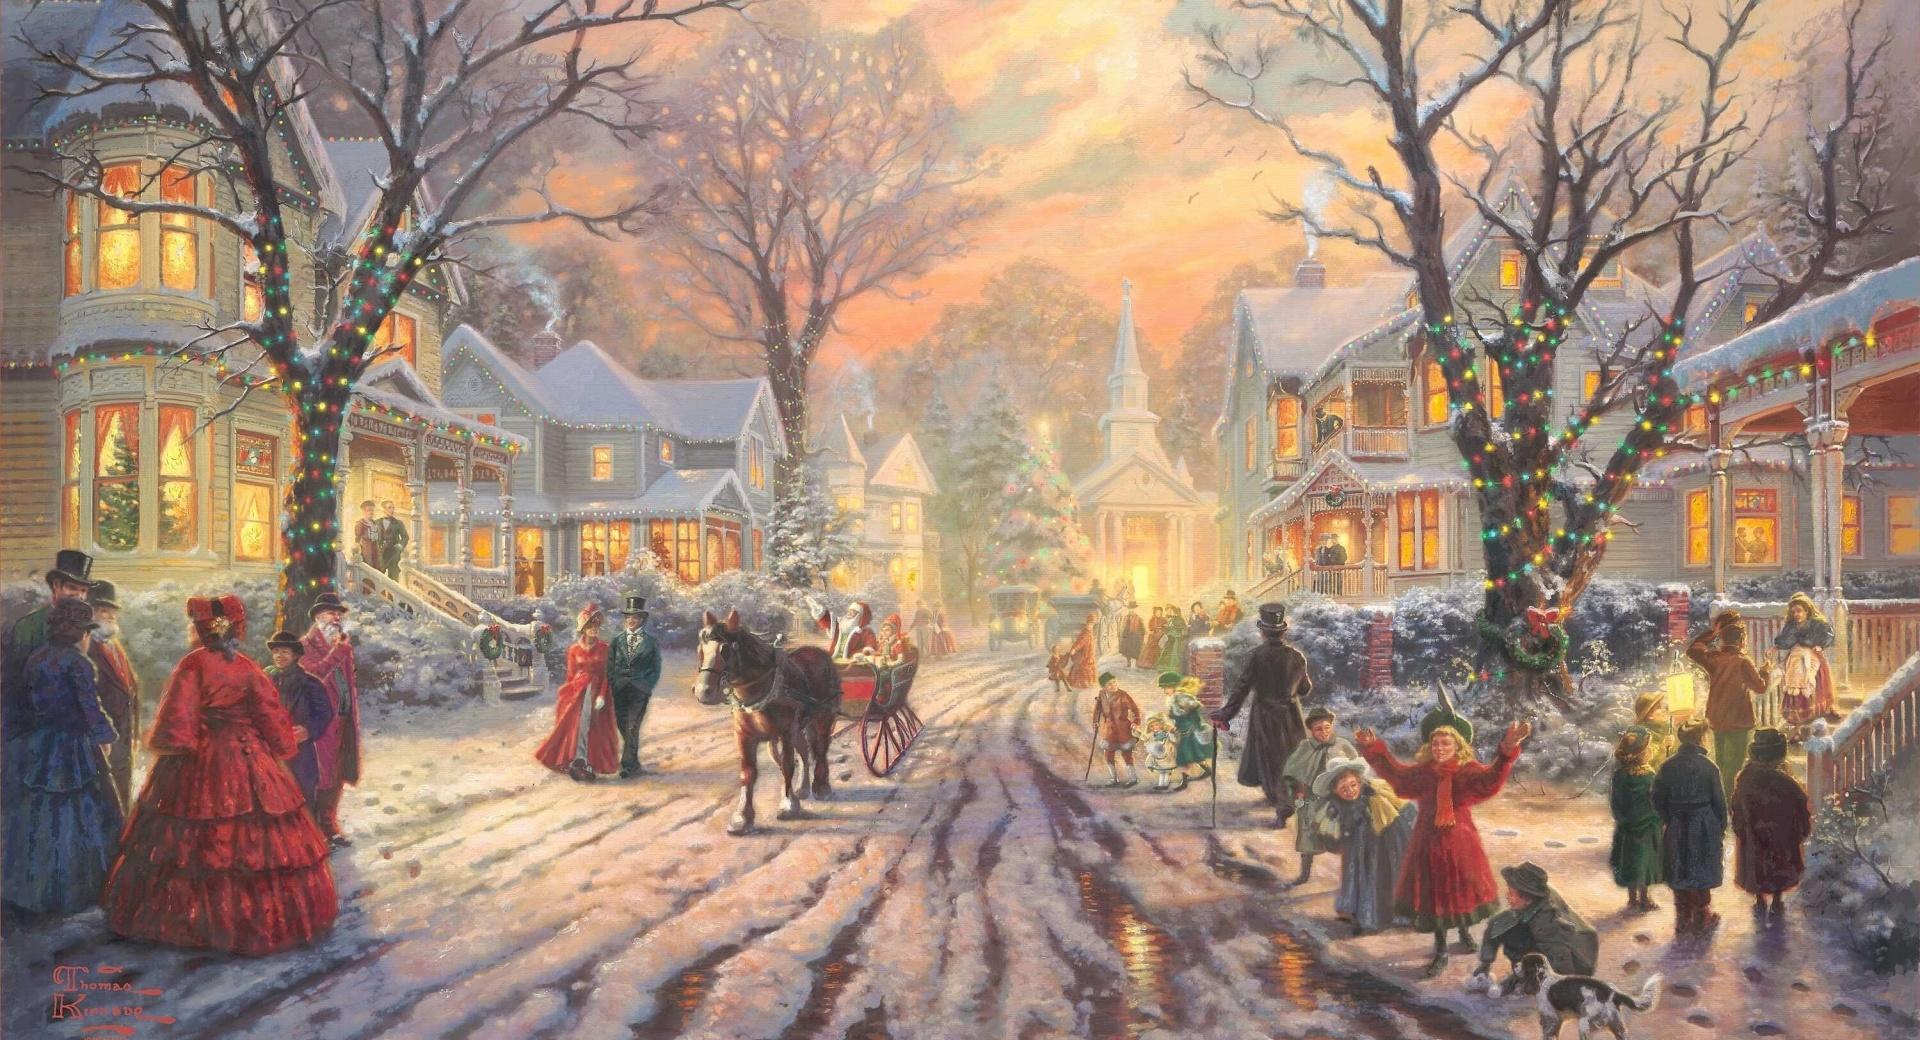 Victorian Christmas Carol by Thomas Kinkade at 1600 x 1200 size wallpapers HD quality